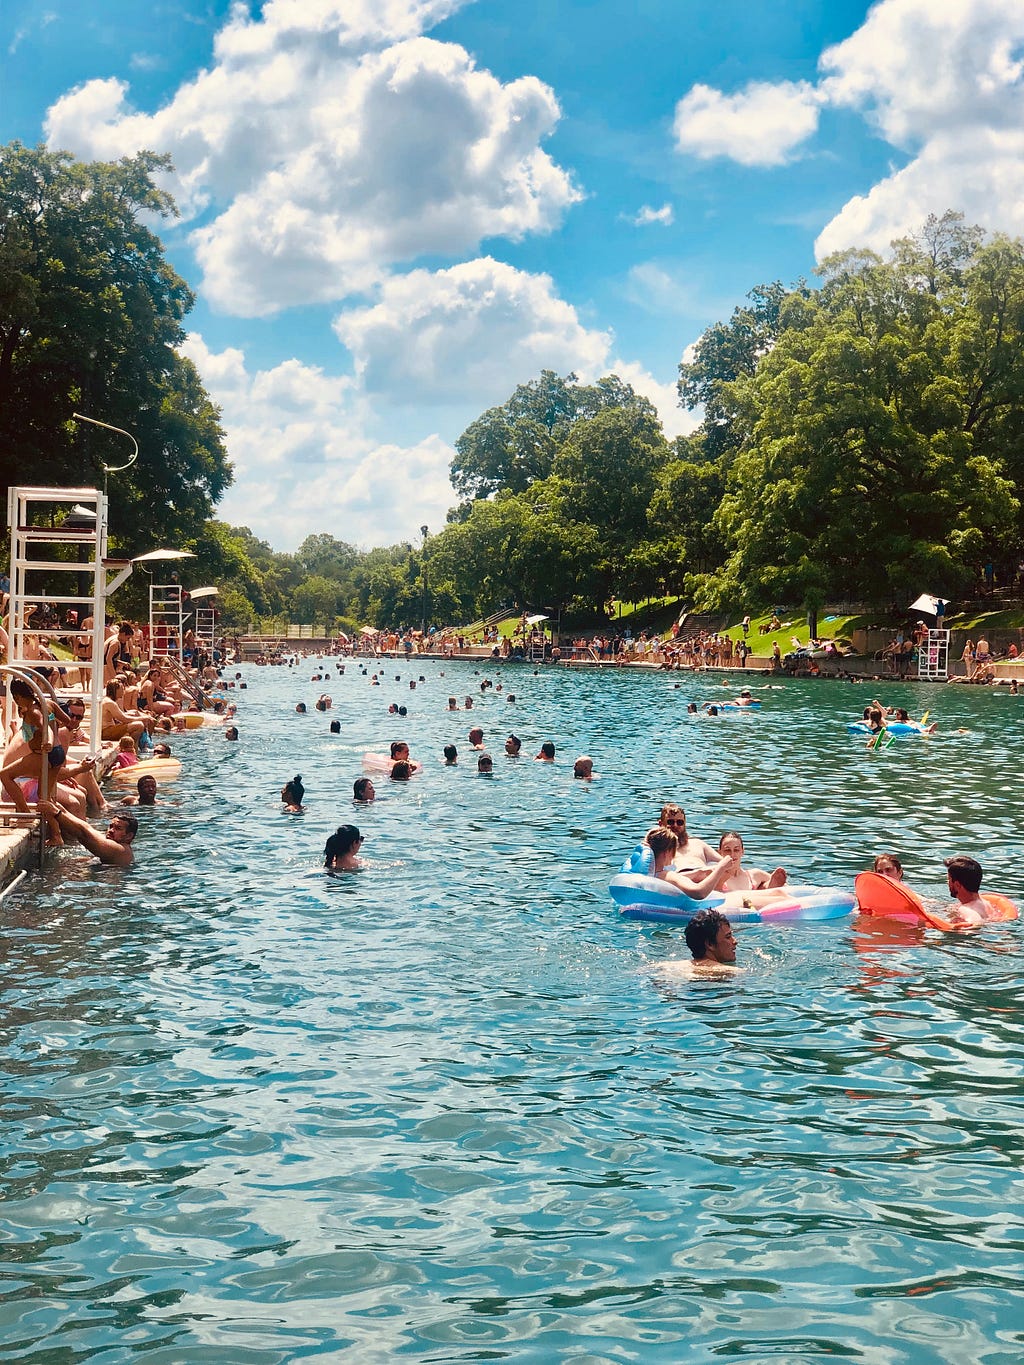 Barton Springs Pool full of people in the summer.